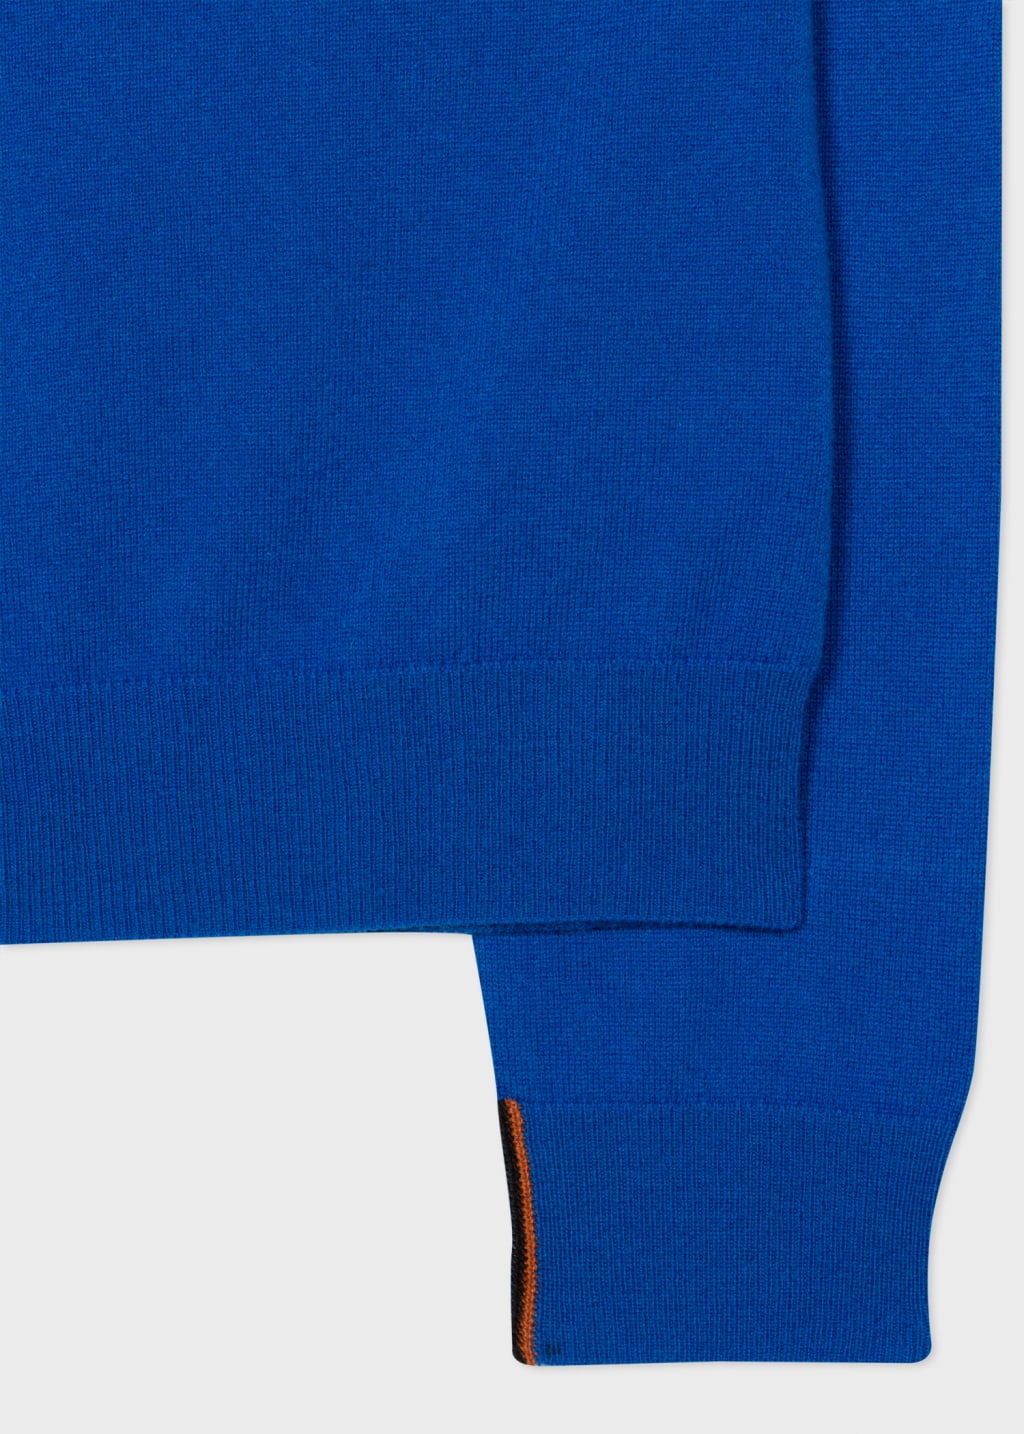 Men's Cobalt Blue Cashmere Zip Up Cardigan